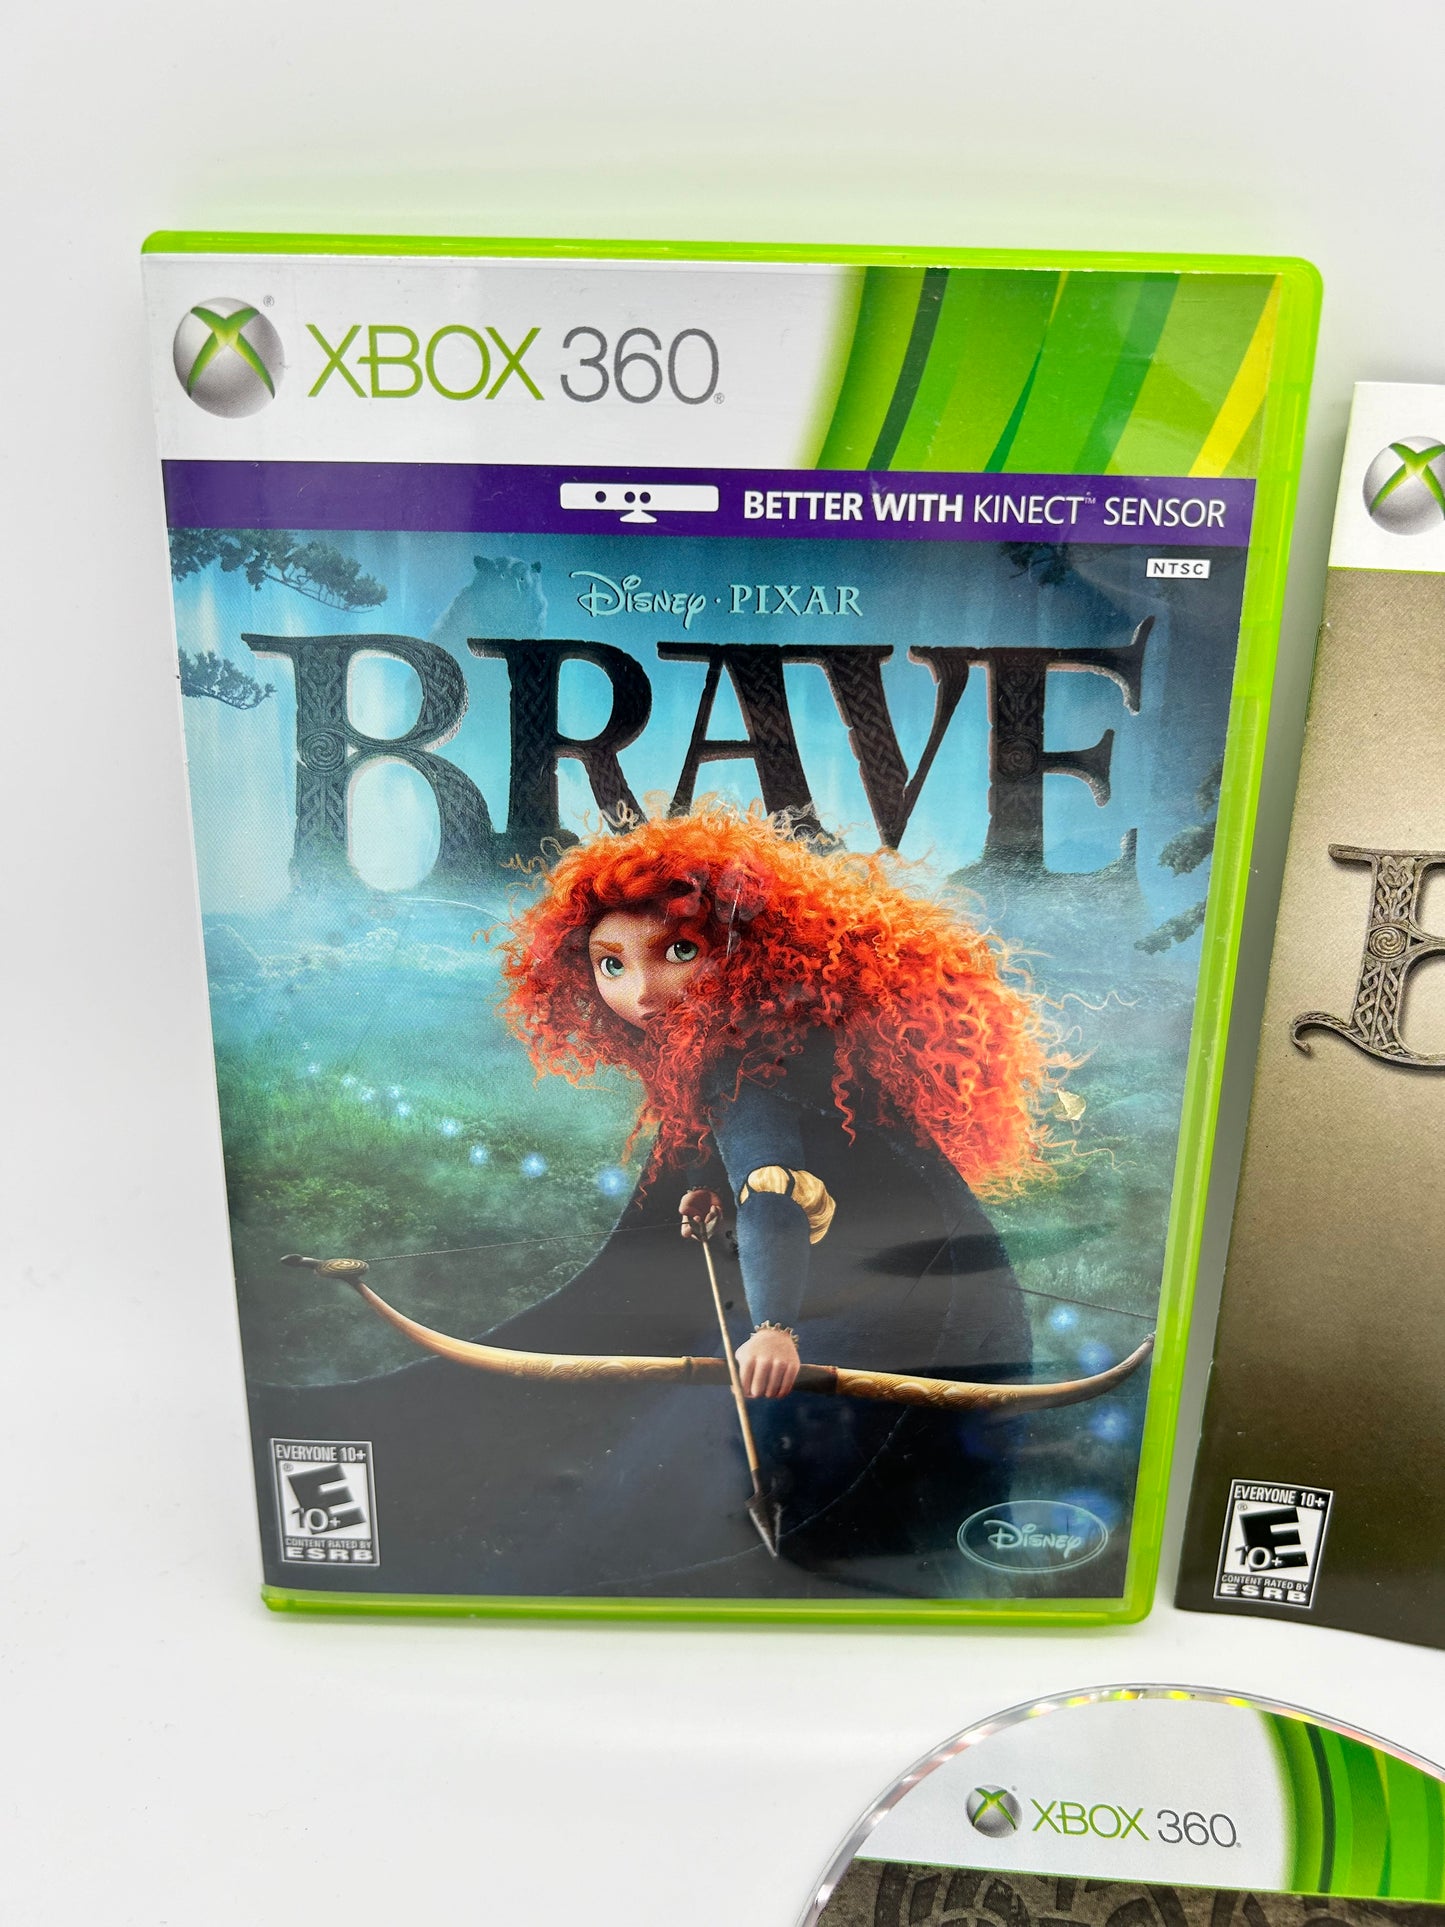 Microsoft XBOX 360 | BRAVE THE Video GAME